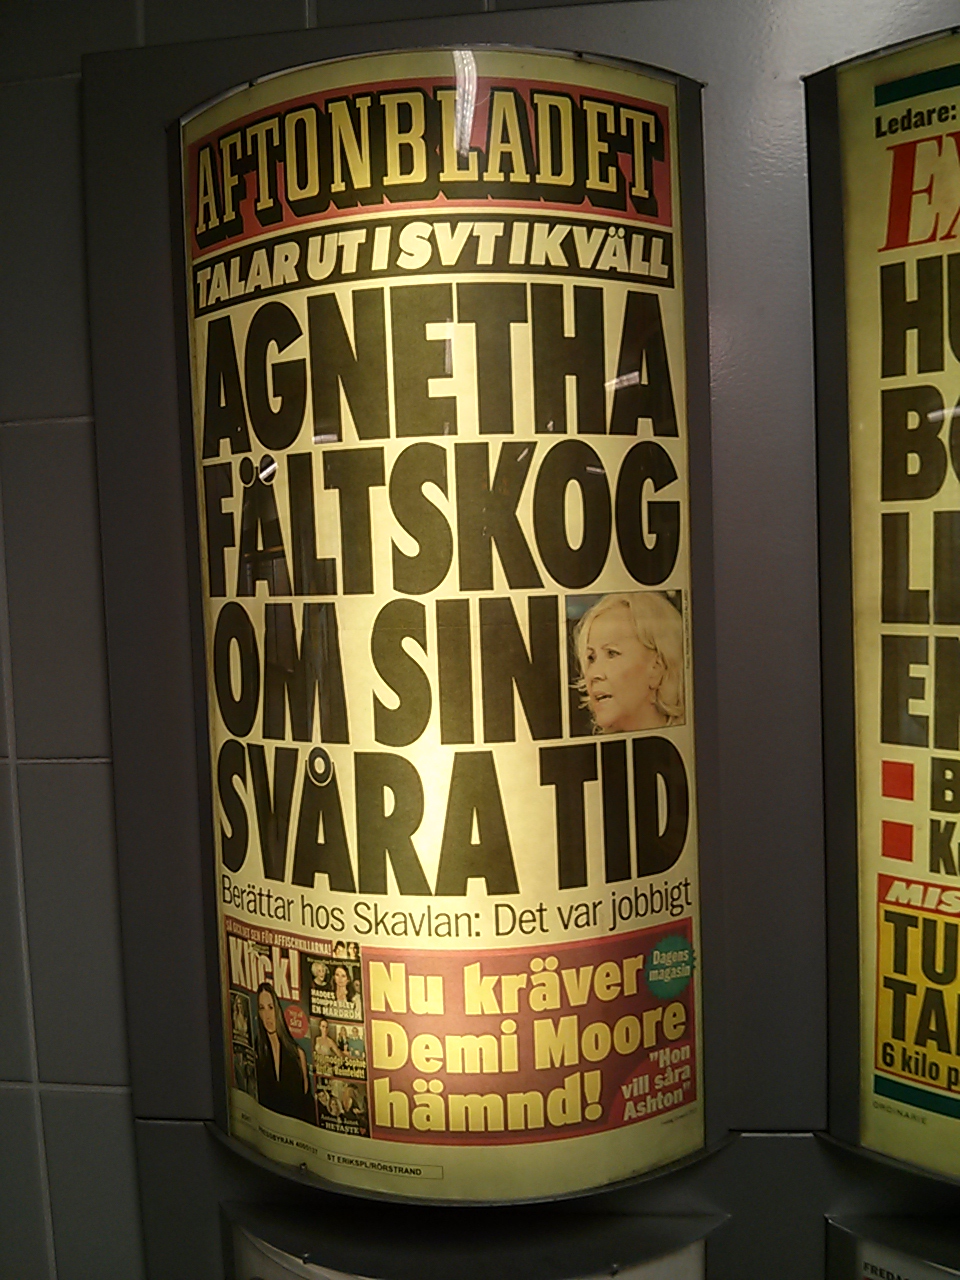 Speaking out on SVT tonight - Agnetha Faltskog on her difficult times.